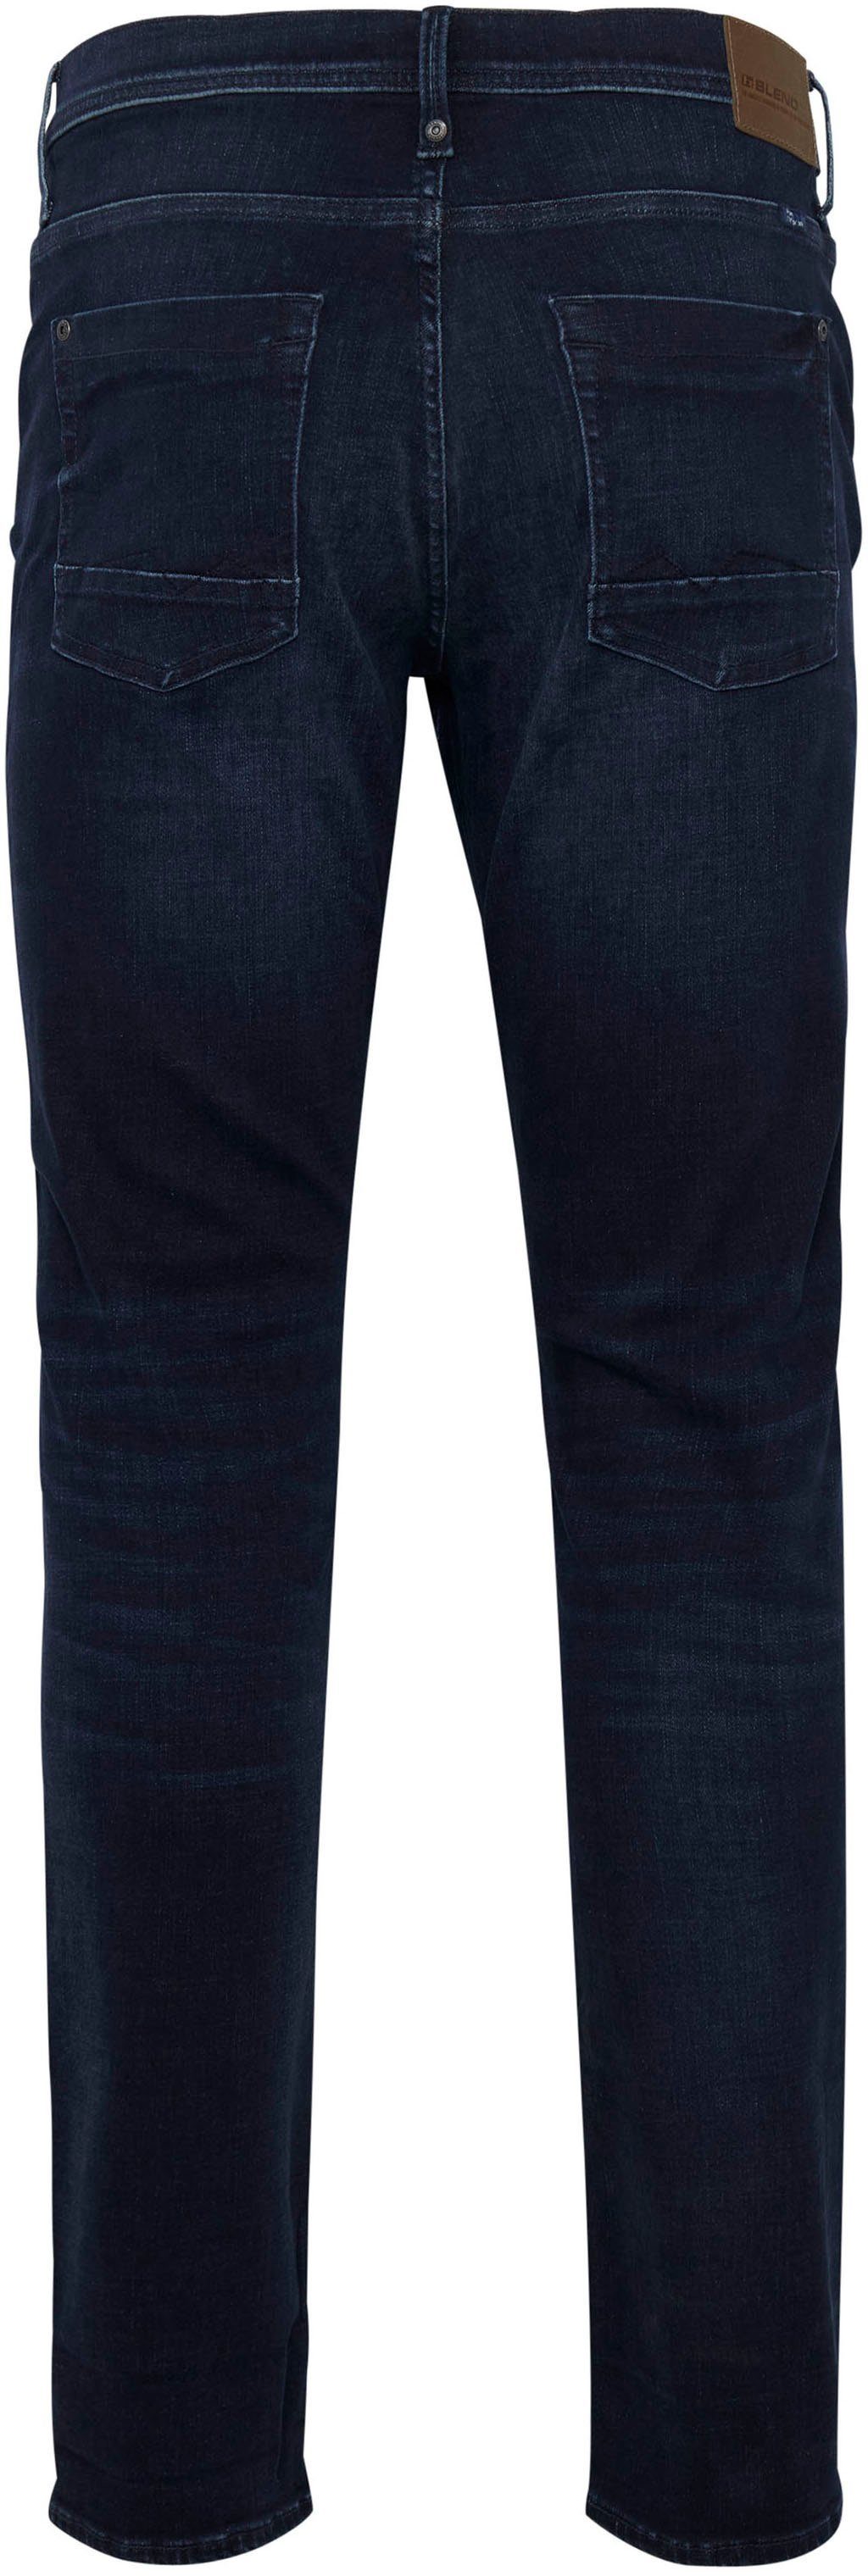 Slim-fit-Jeans Twister darkblue Multiflex Blend